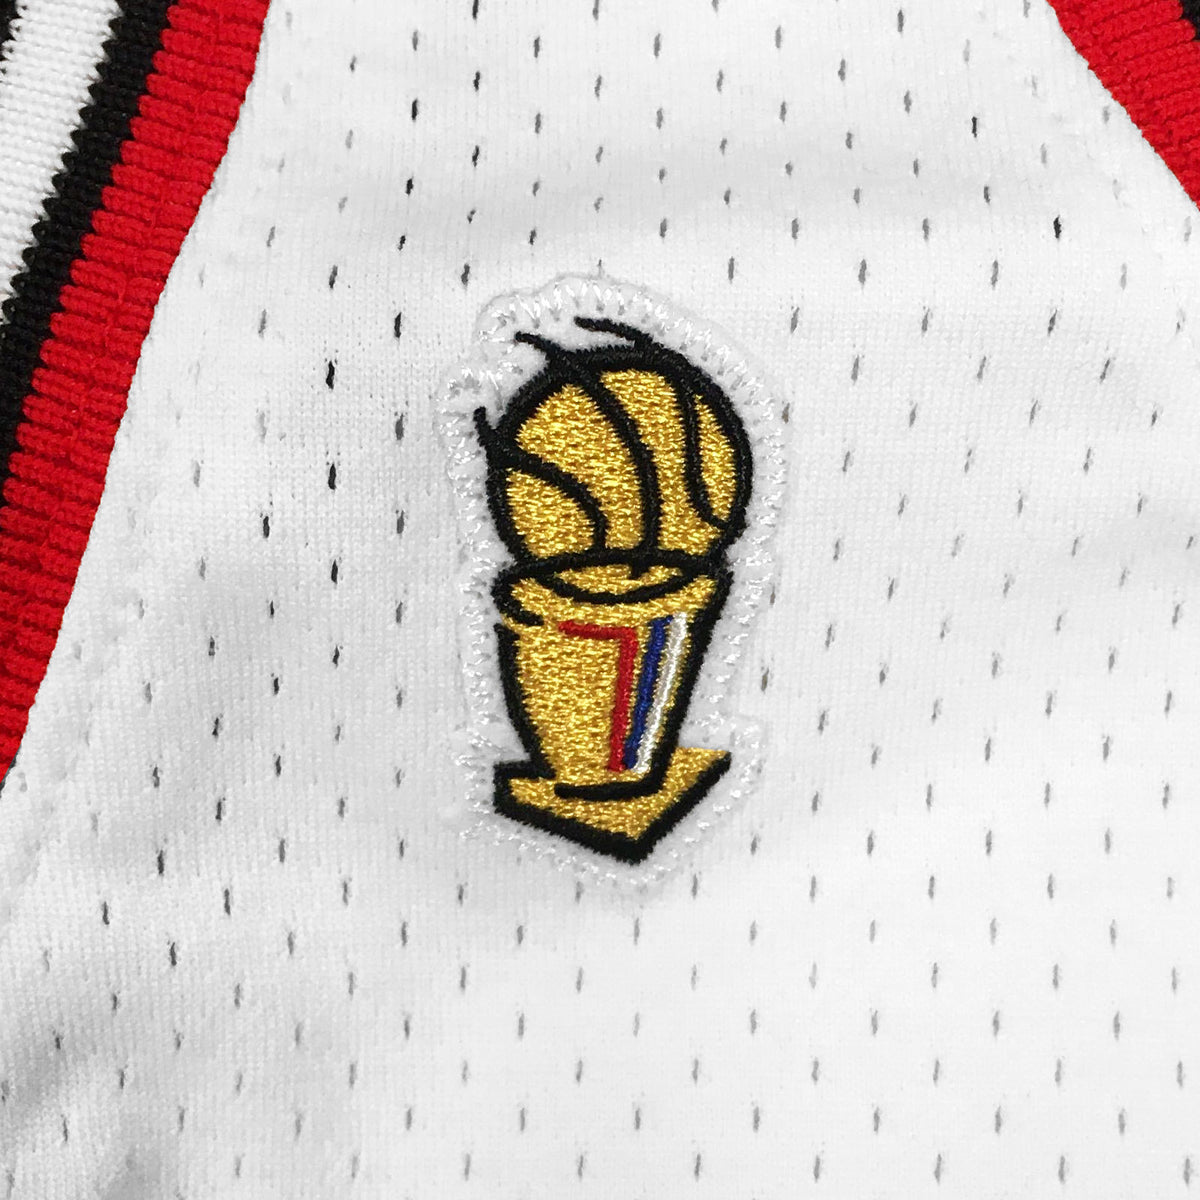 Chicago Bulls Michael Jordan 1995/96 White Champion Jersey - The